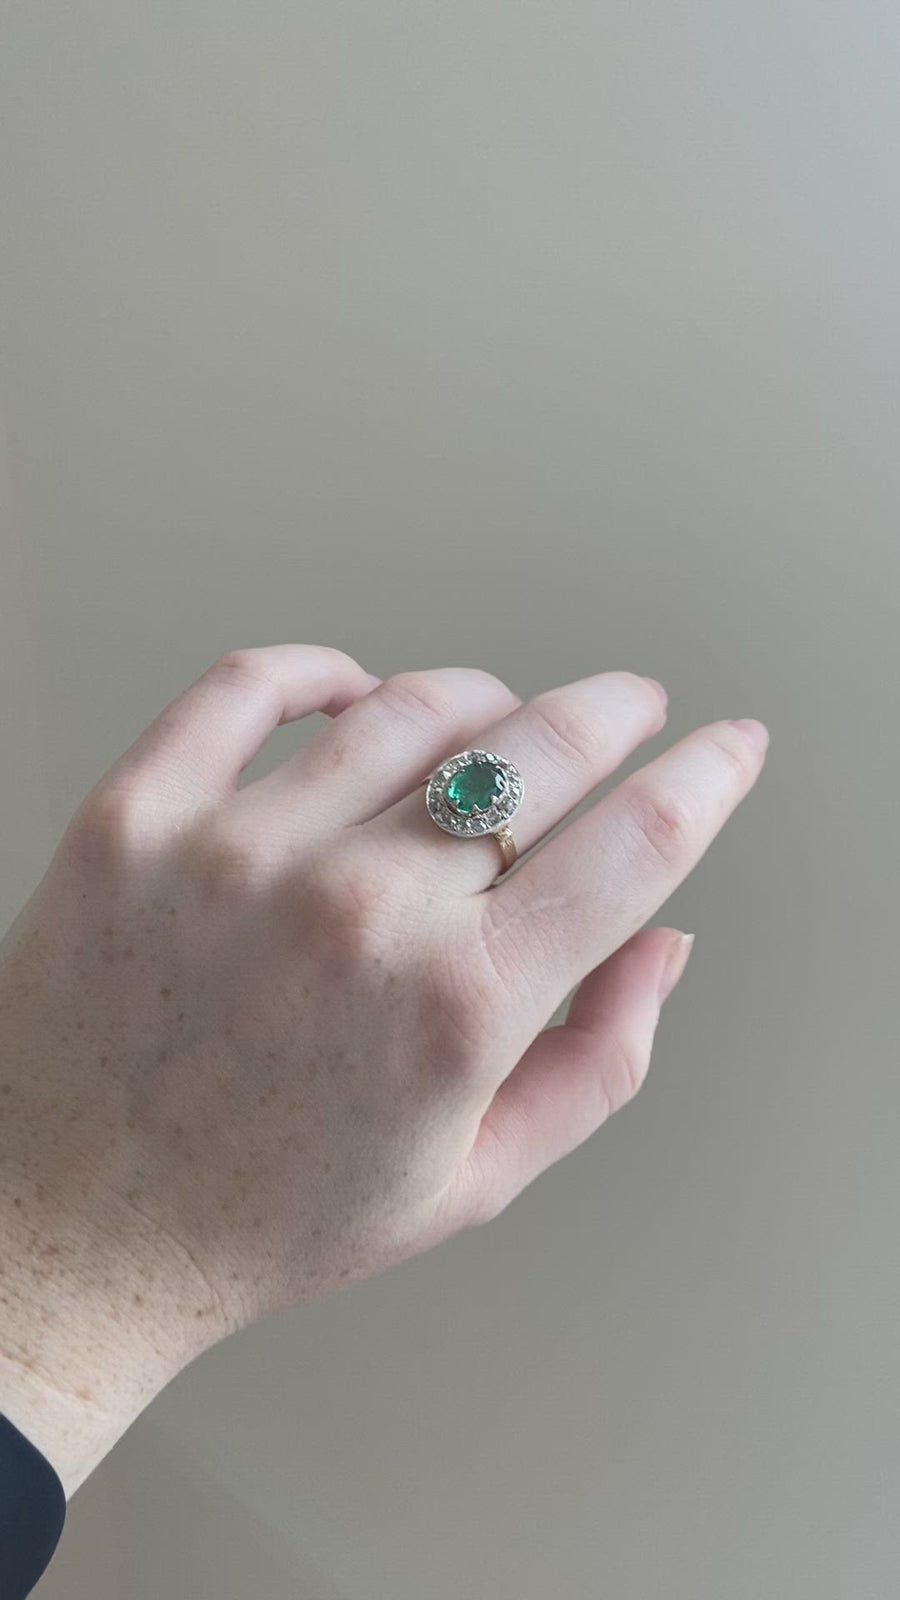 Emerald daisy ring with diamonds